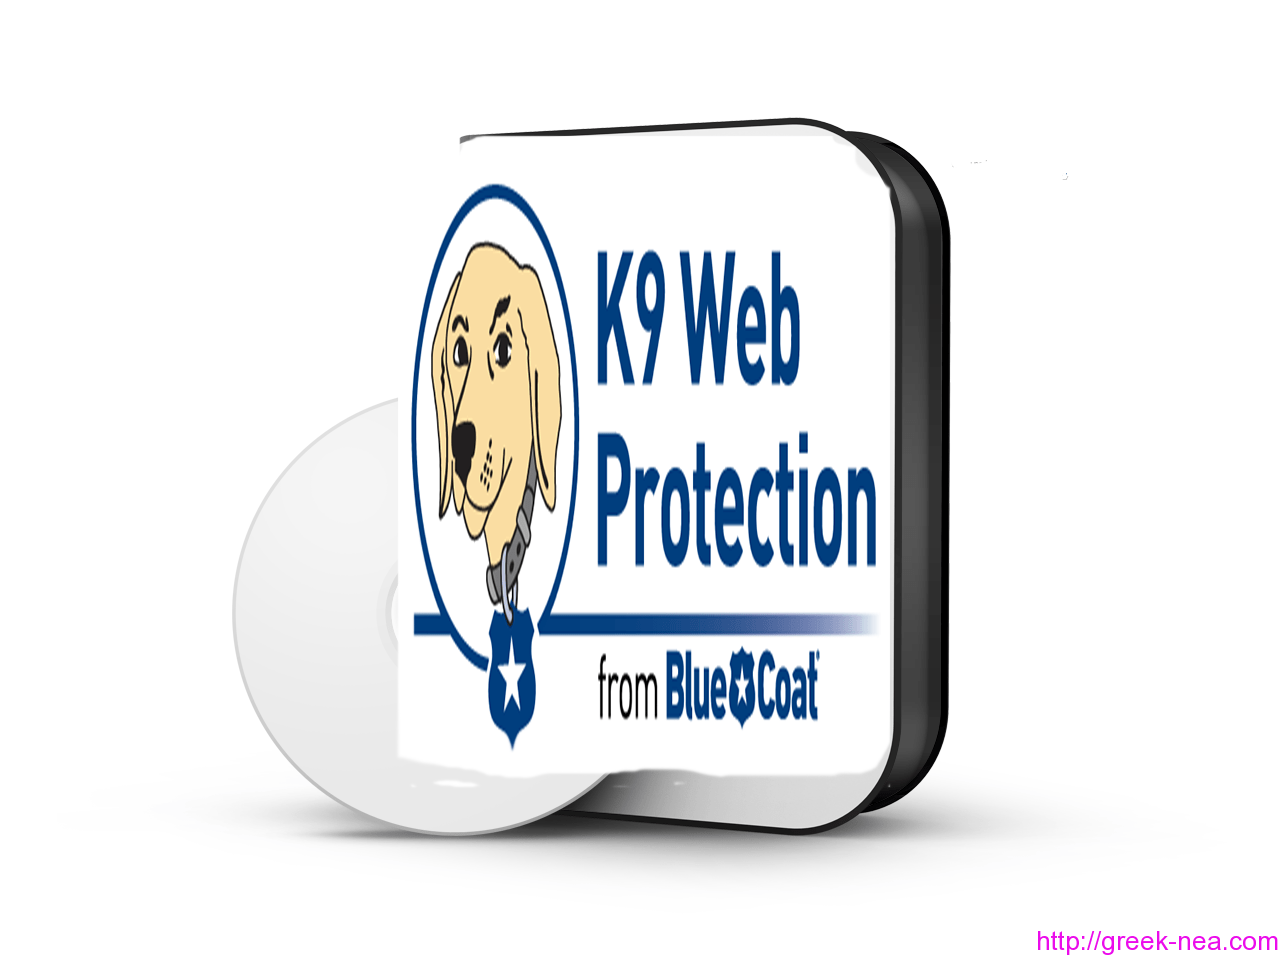 K9 Web Protection: Ασφαλές Internet για Όλους